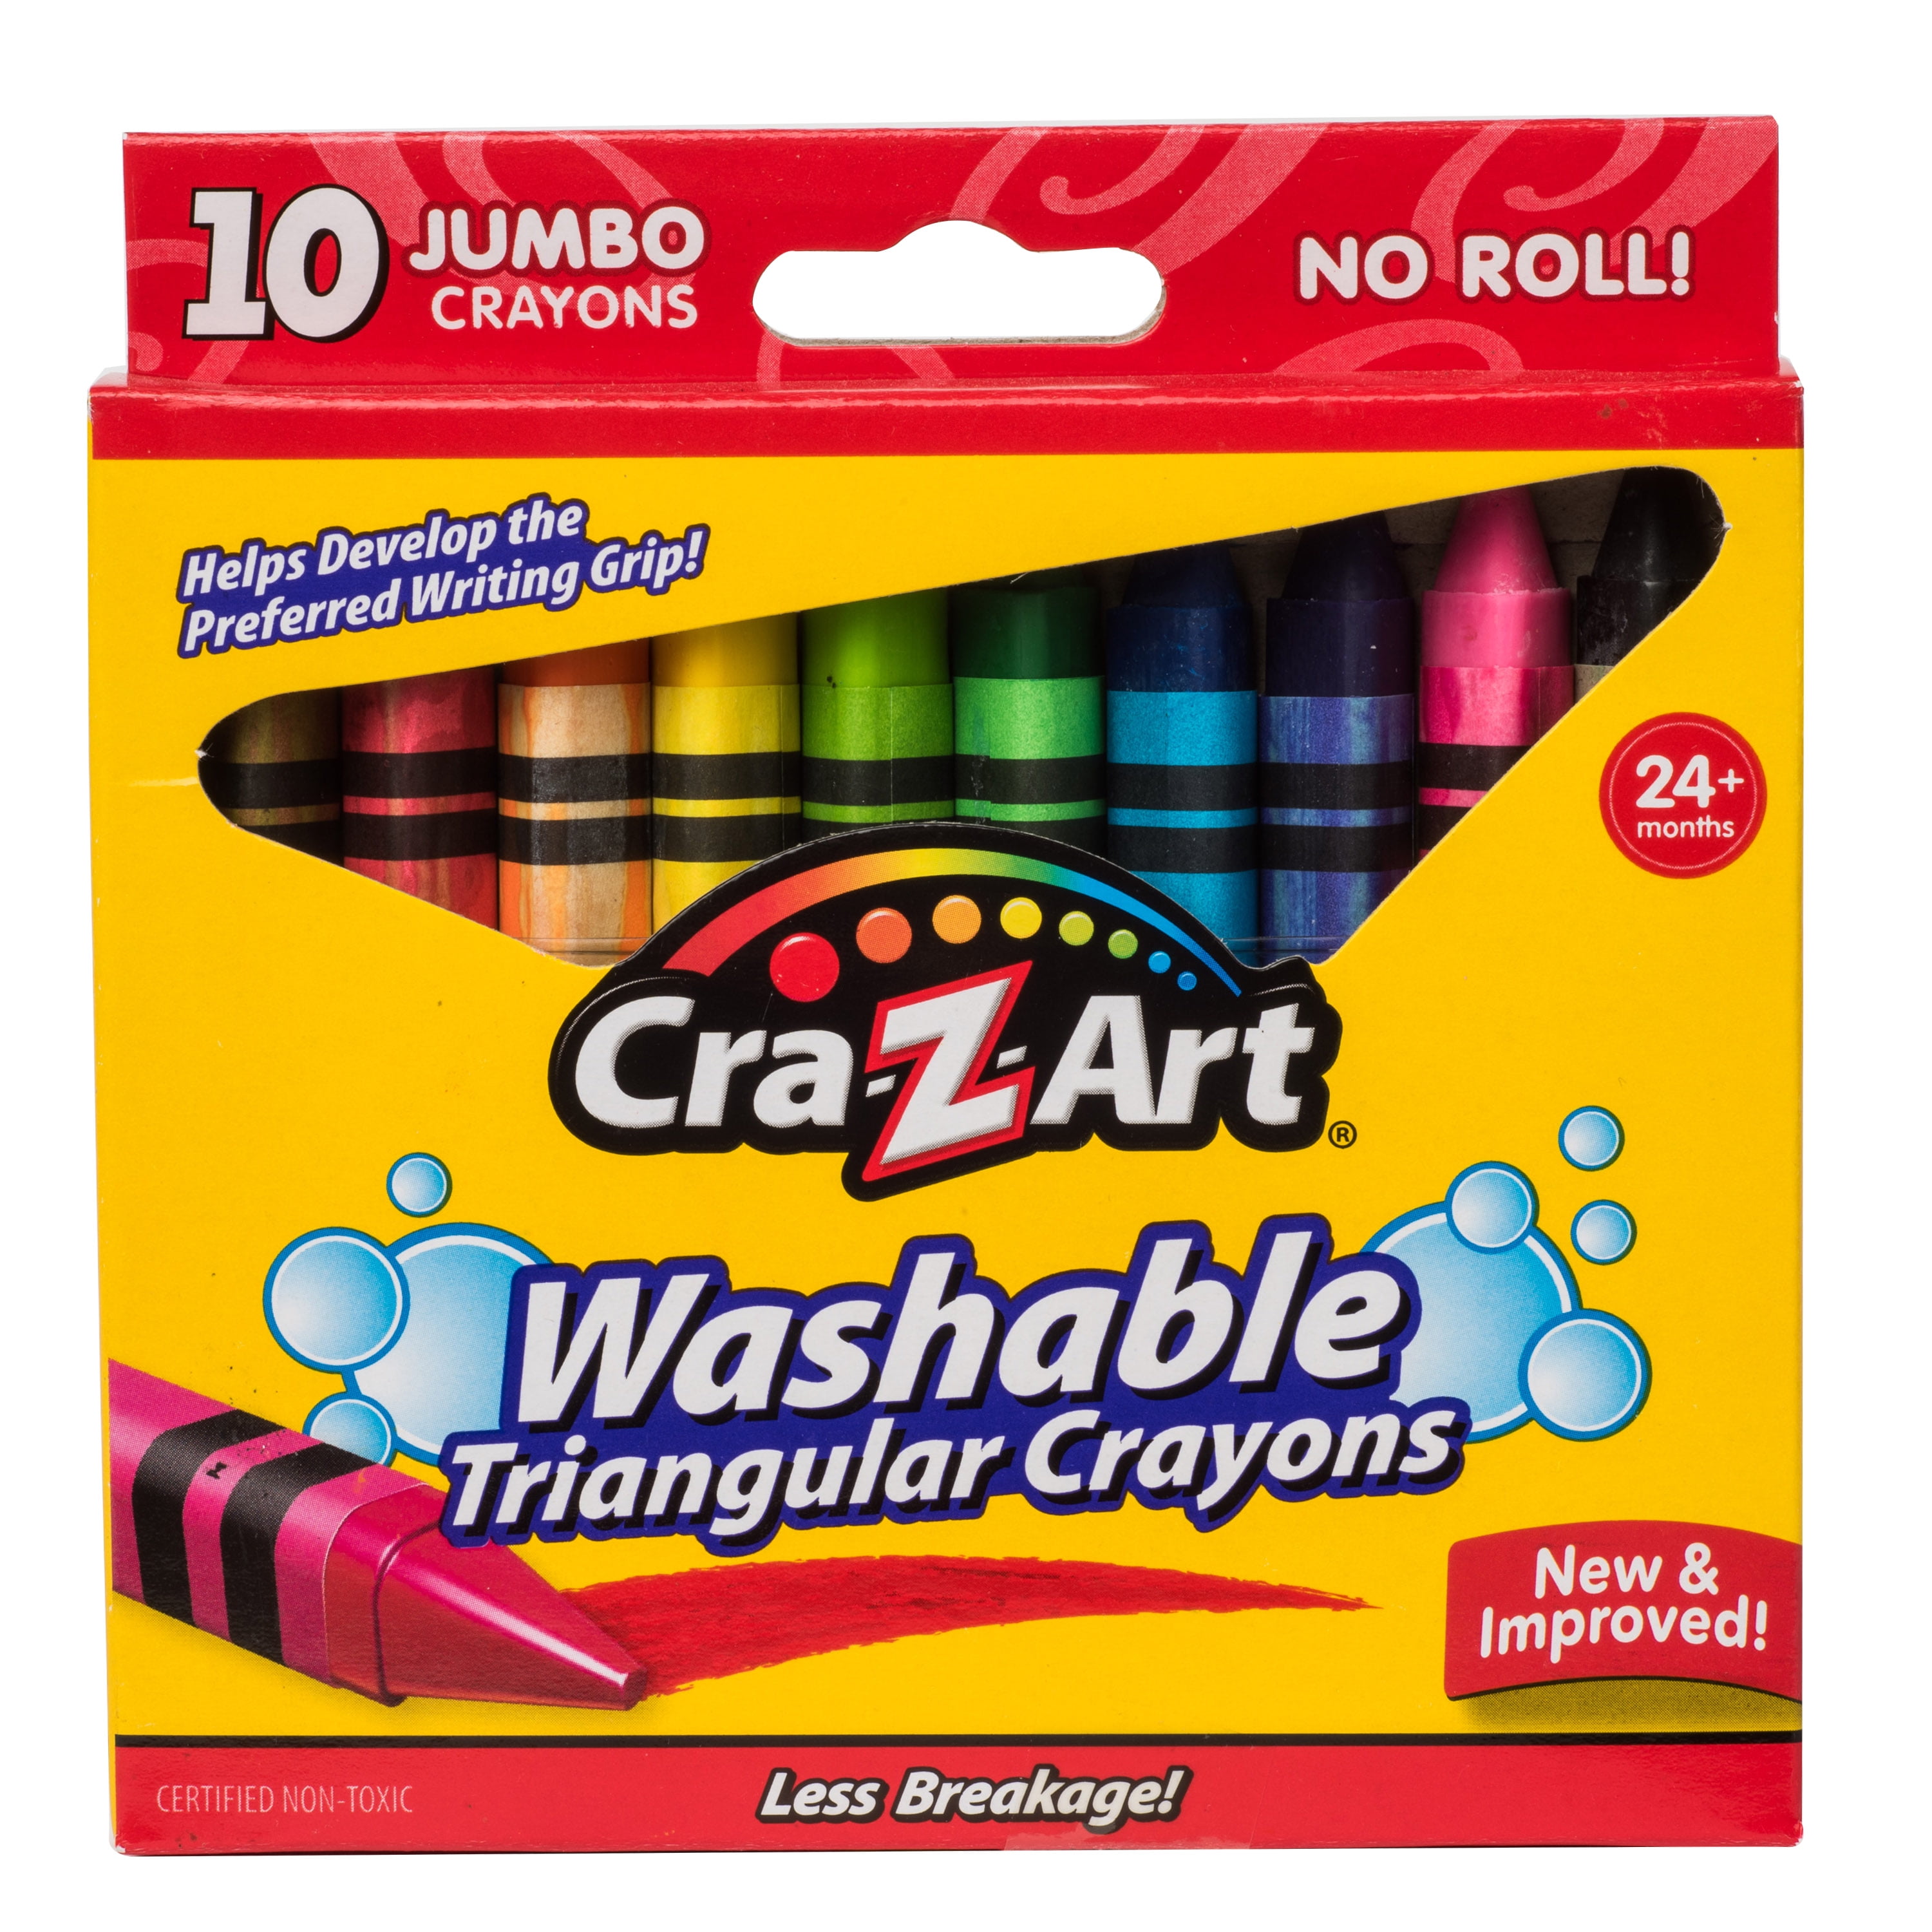 18x Crayola Jumbo Crayons Children Easy Grip Chunky Colouring 8 Crayons wax 